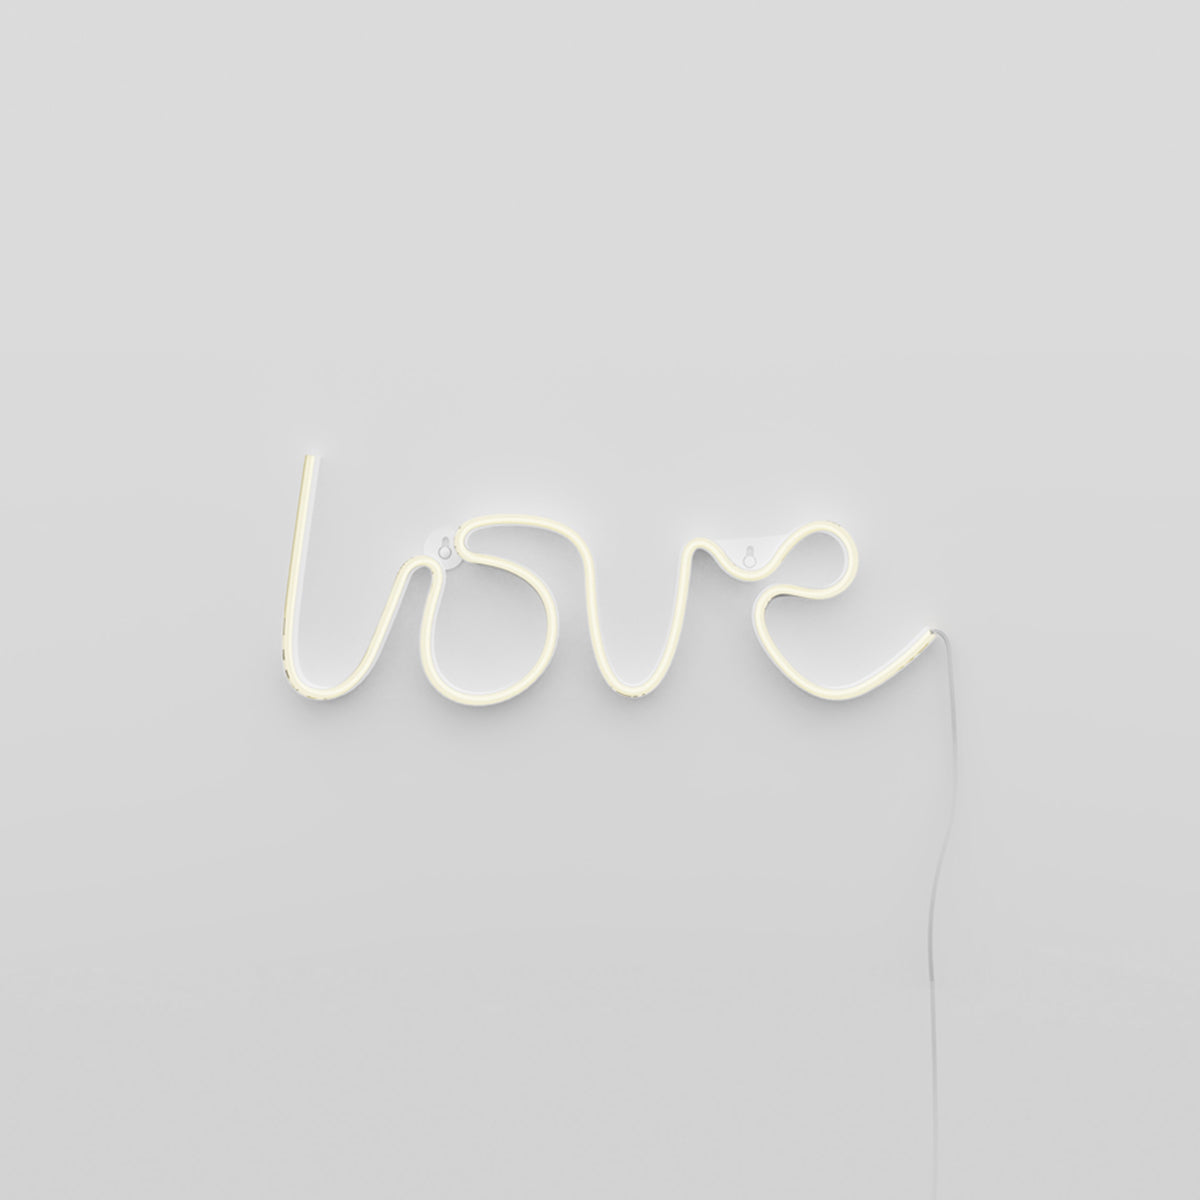 "Love" LED Sign